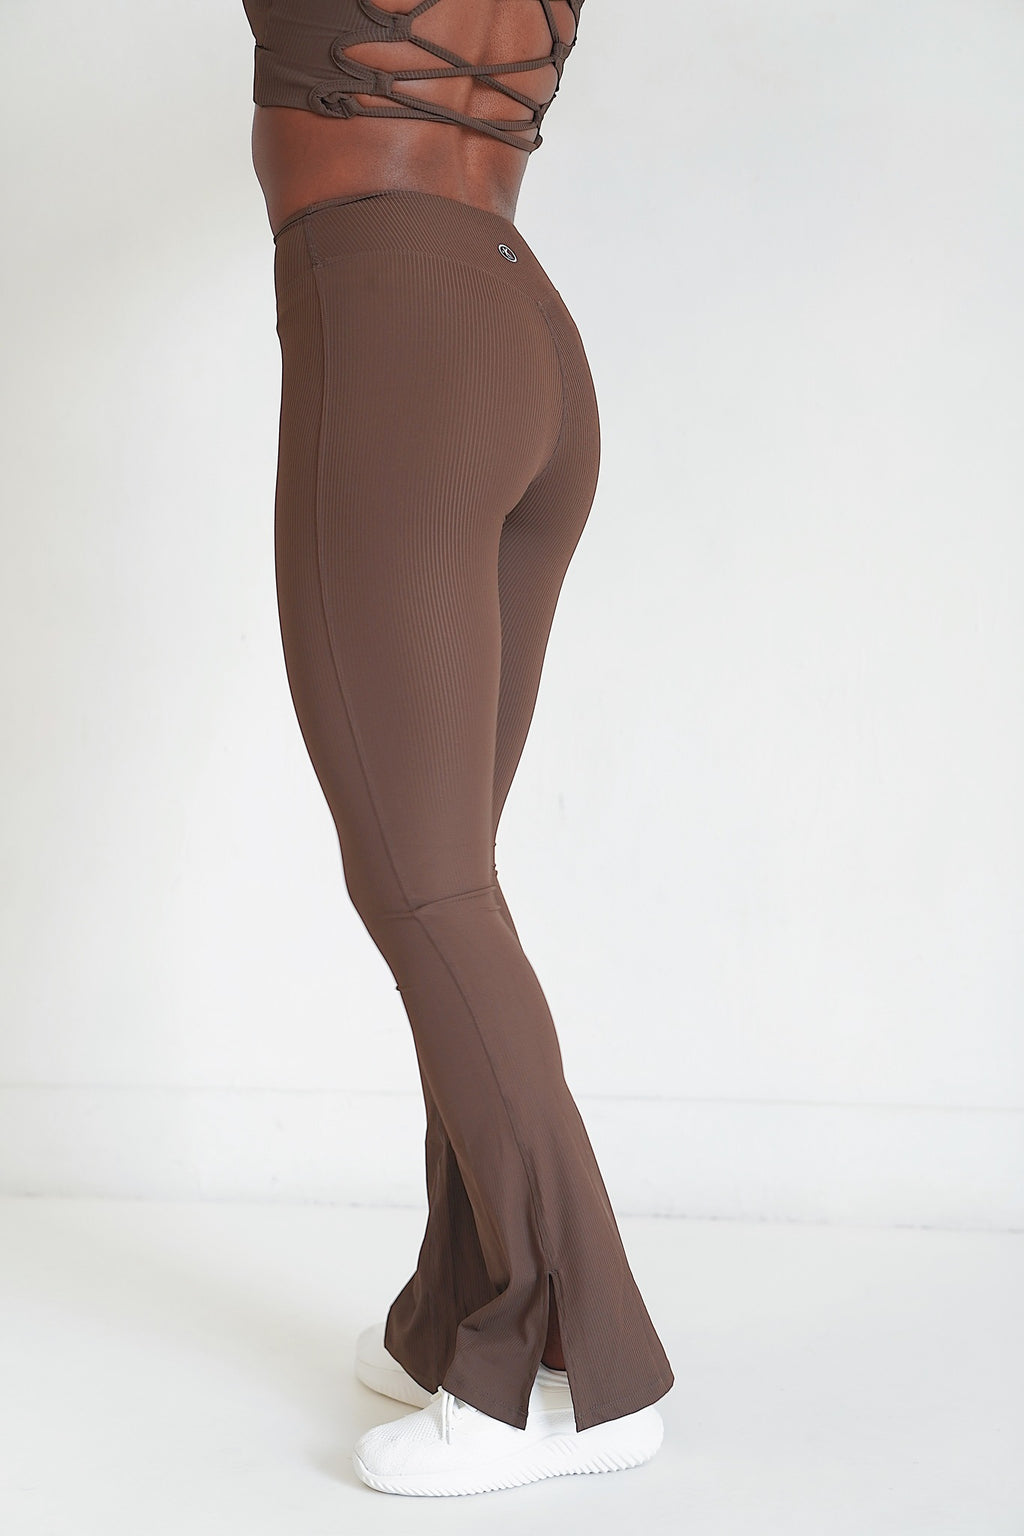 Chocolate brown leggings, Zazzle